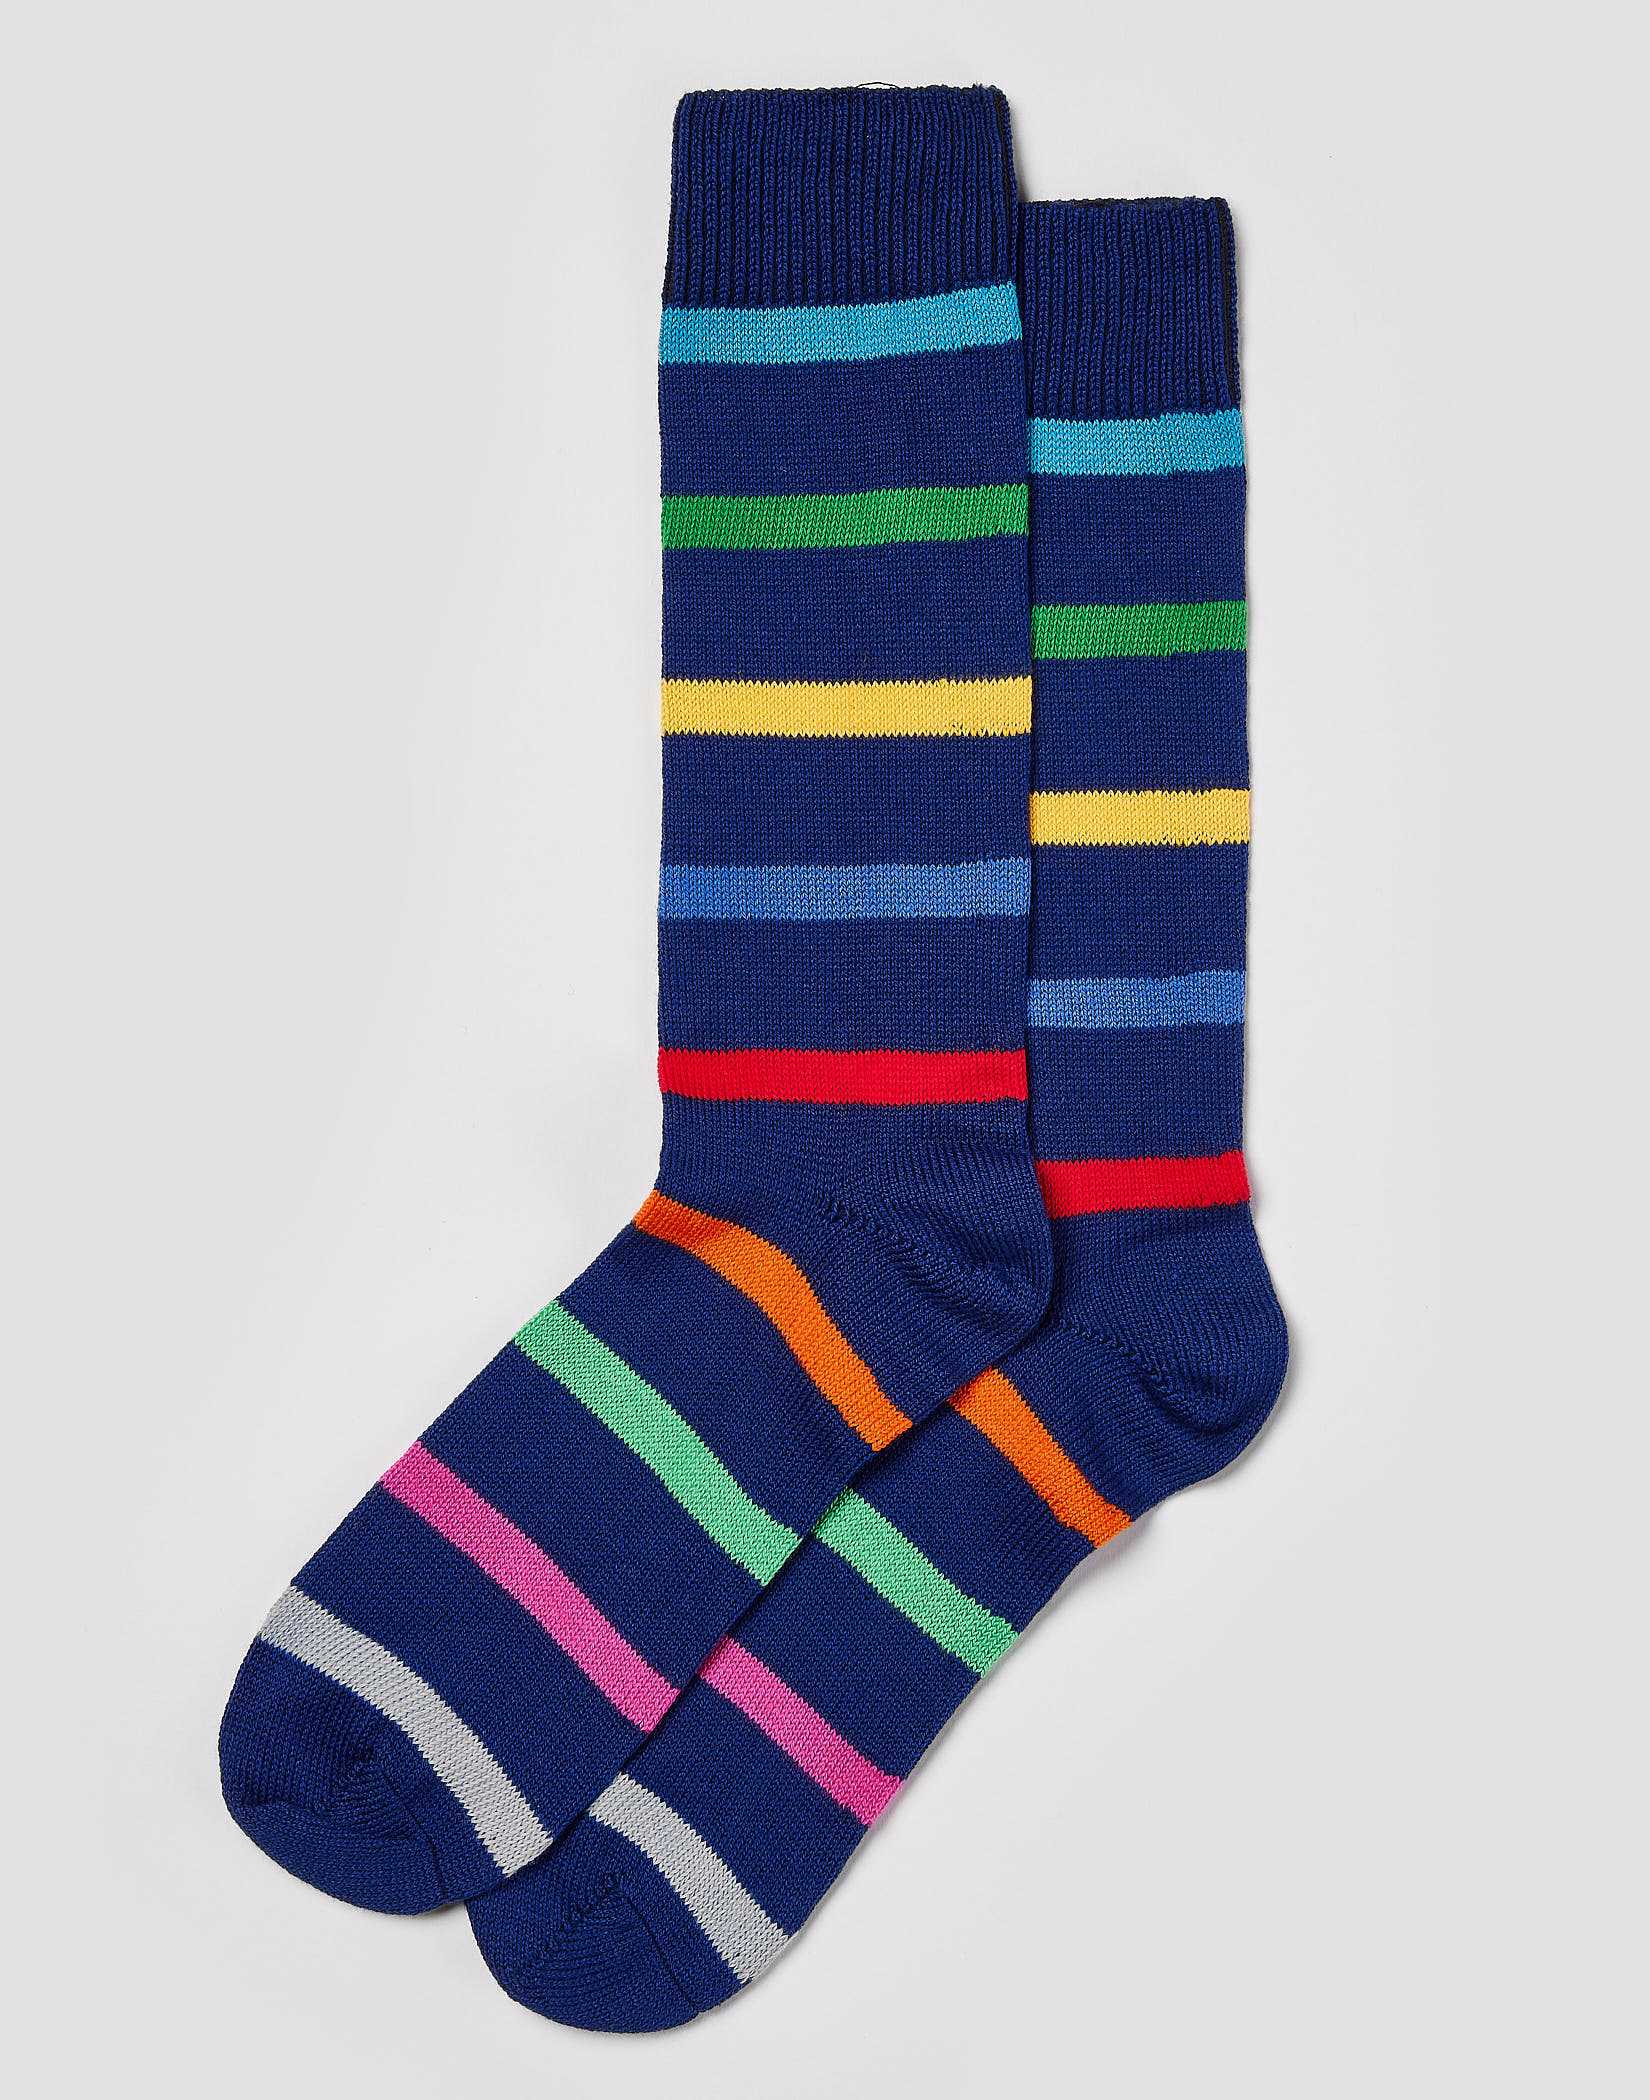 Men's Accessories | Classic Wool & Cotton Socks for Men - Joseph Turner